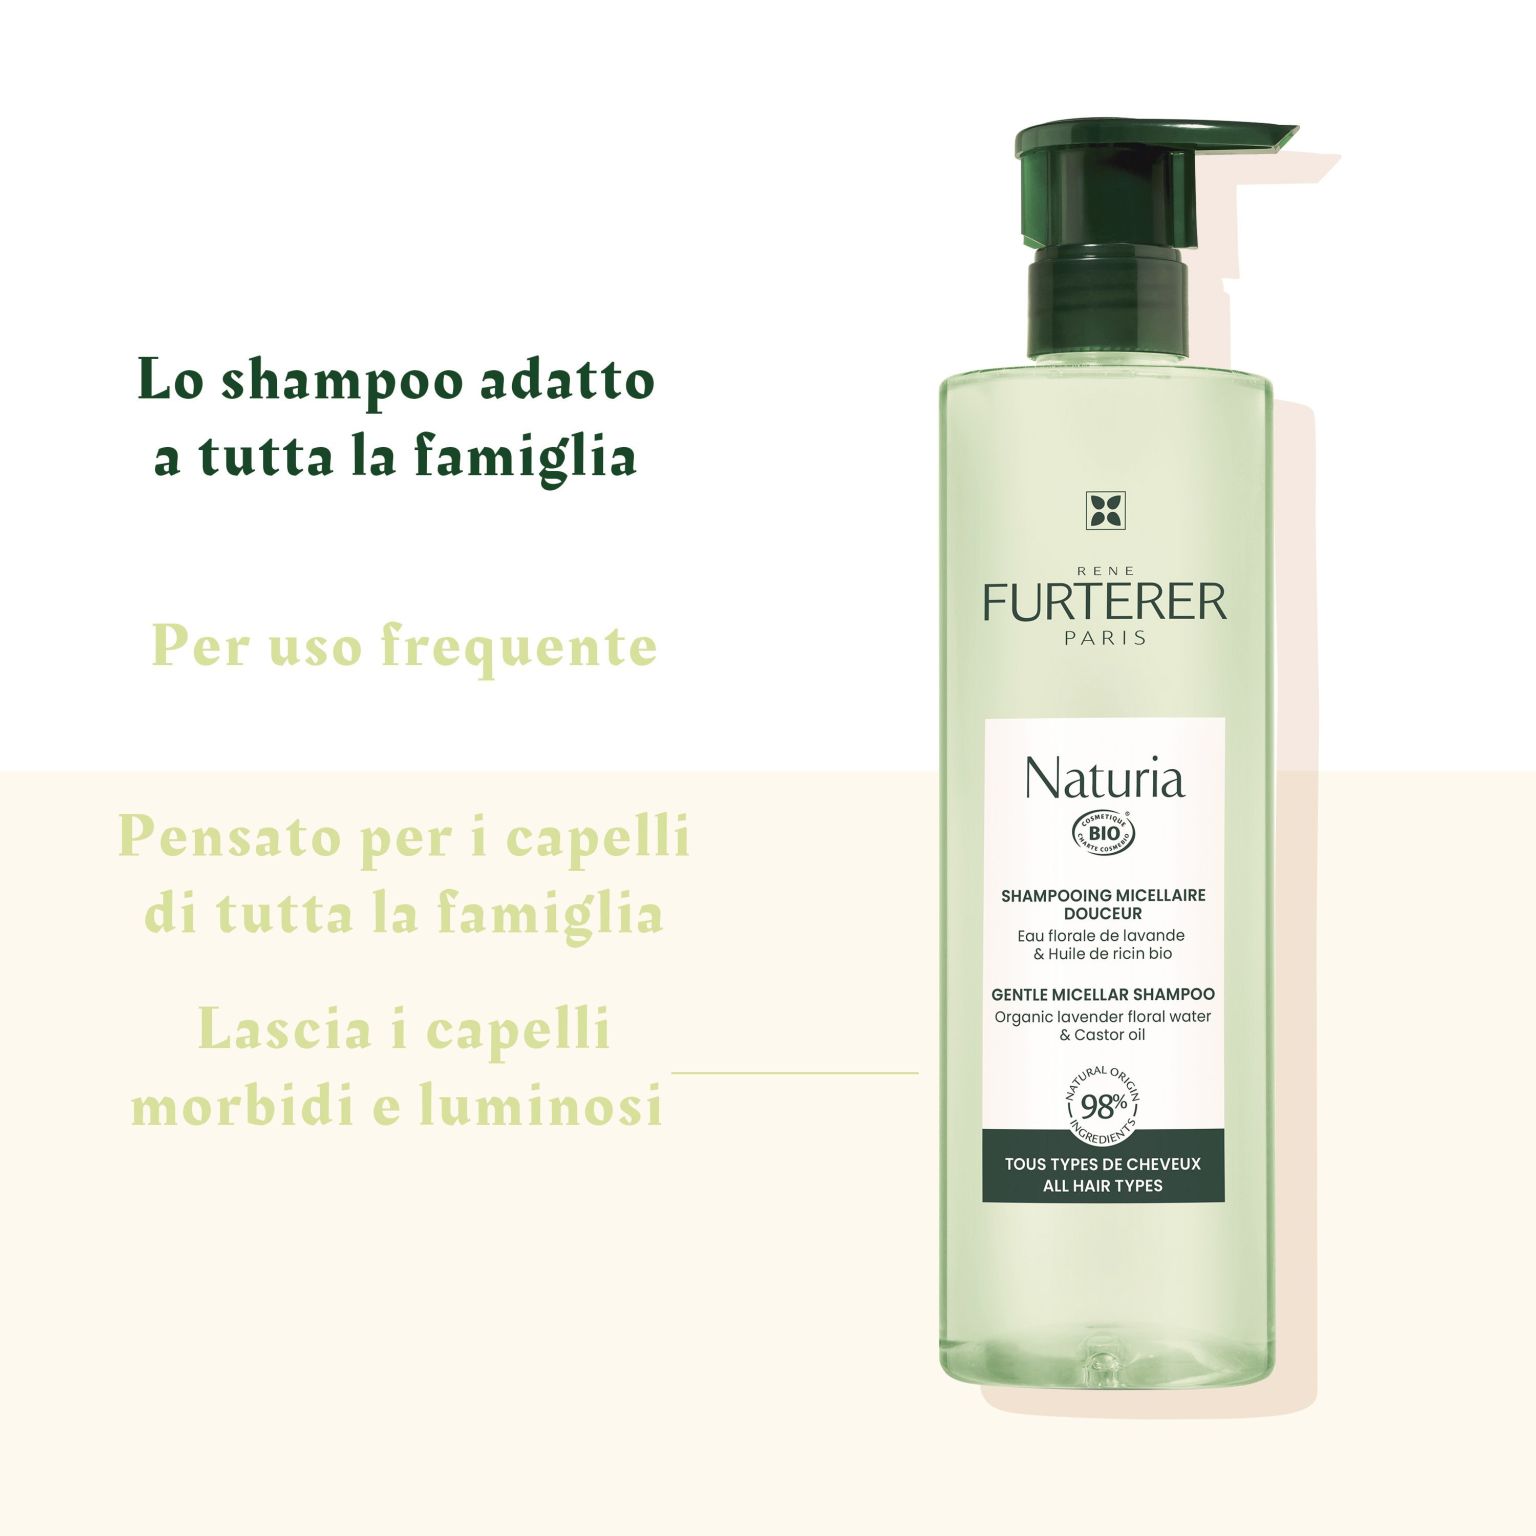 983542883 - Renè Furterer Naturia Shampoo micellare delicato 400ml - 4709302_2.jpg